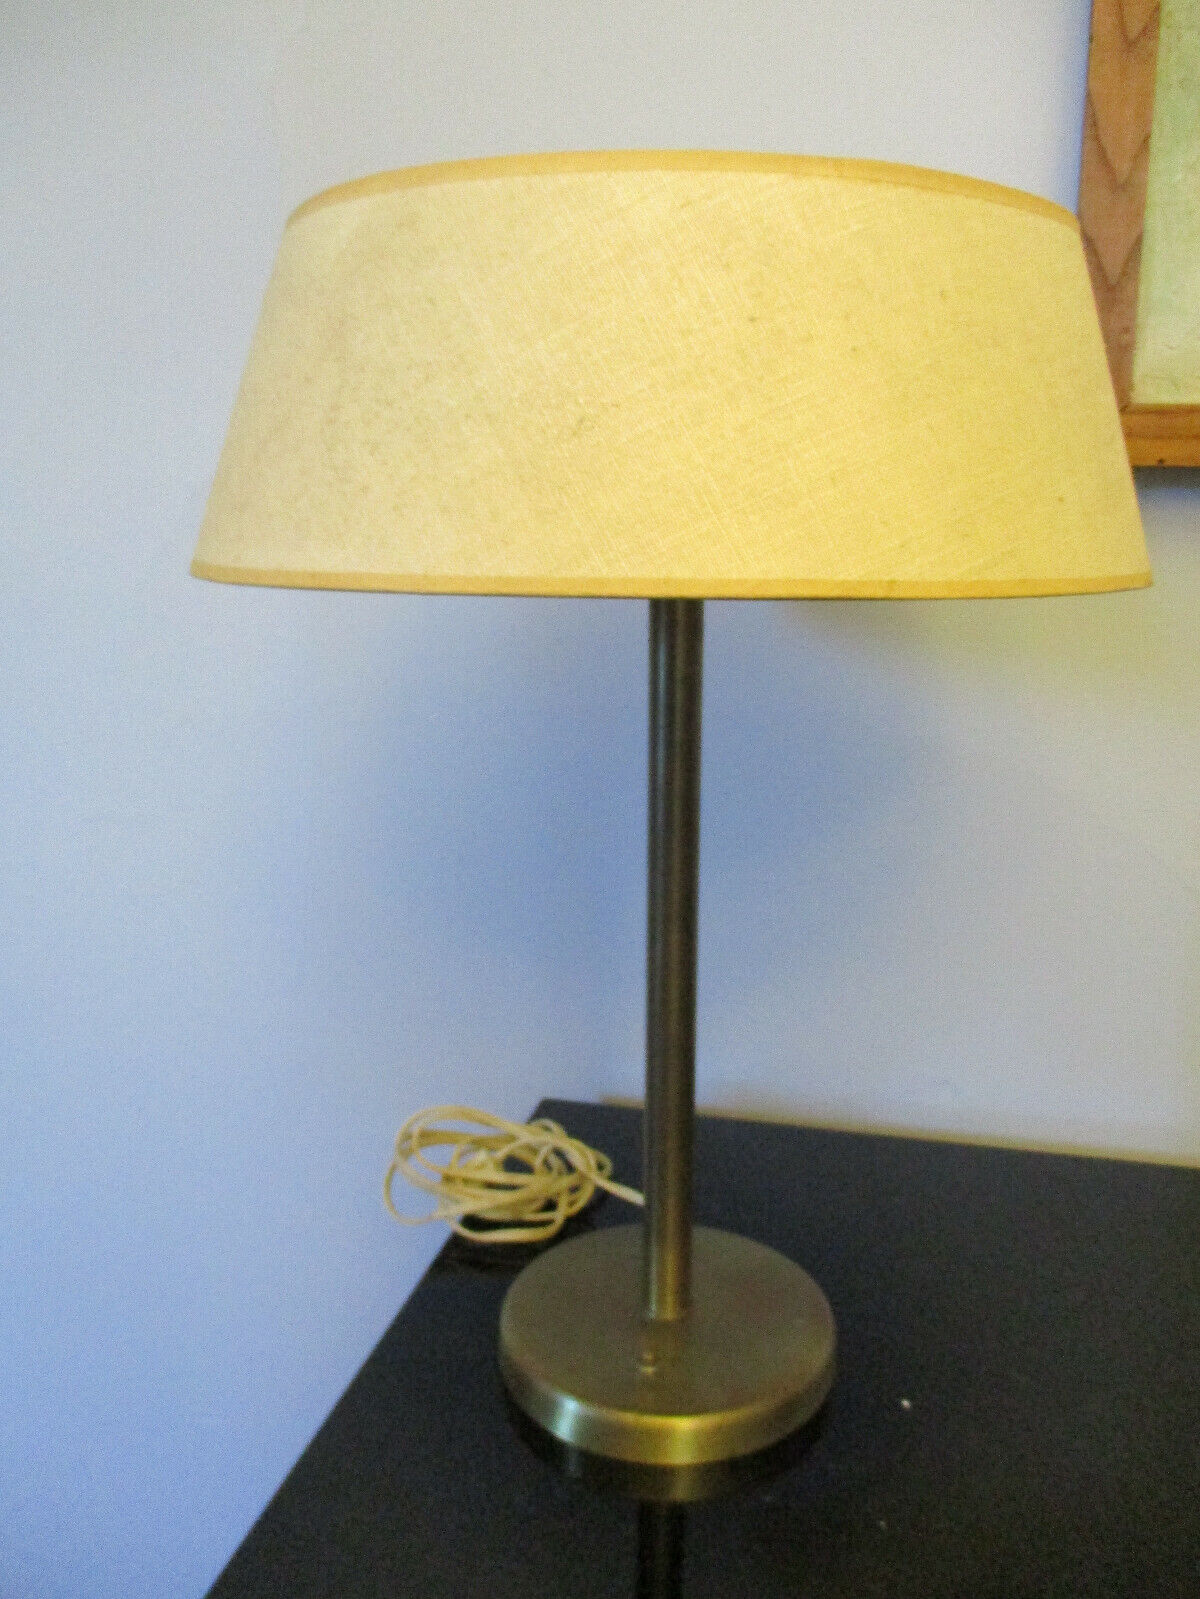 Vintage Retro Mid Century Danish Modern Eames Thurston Era Brass Table Lamp